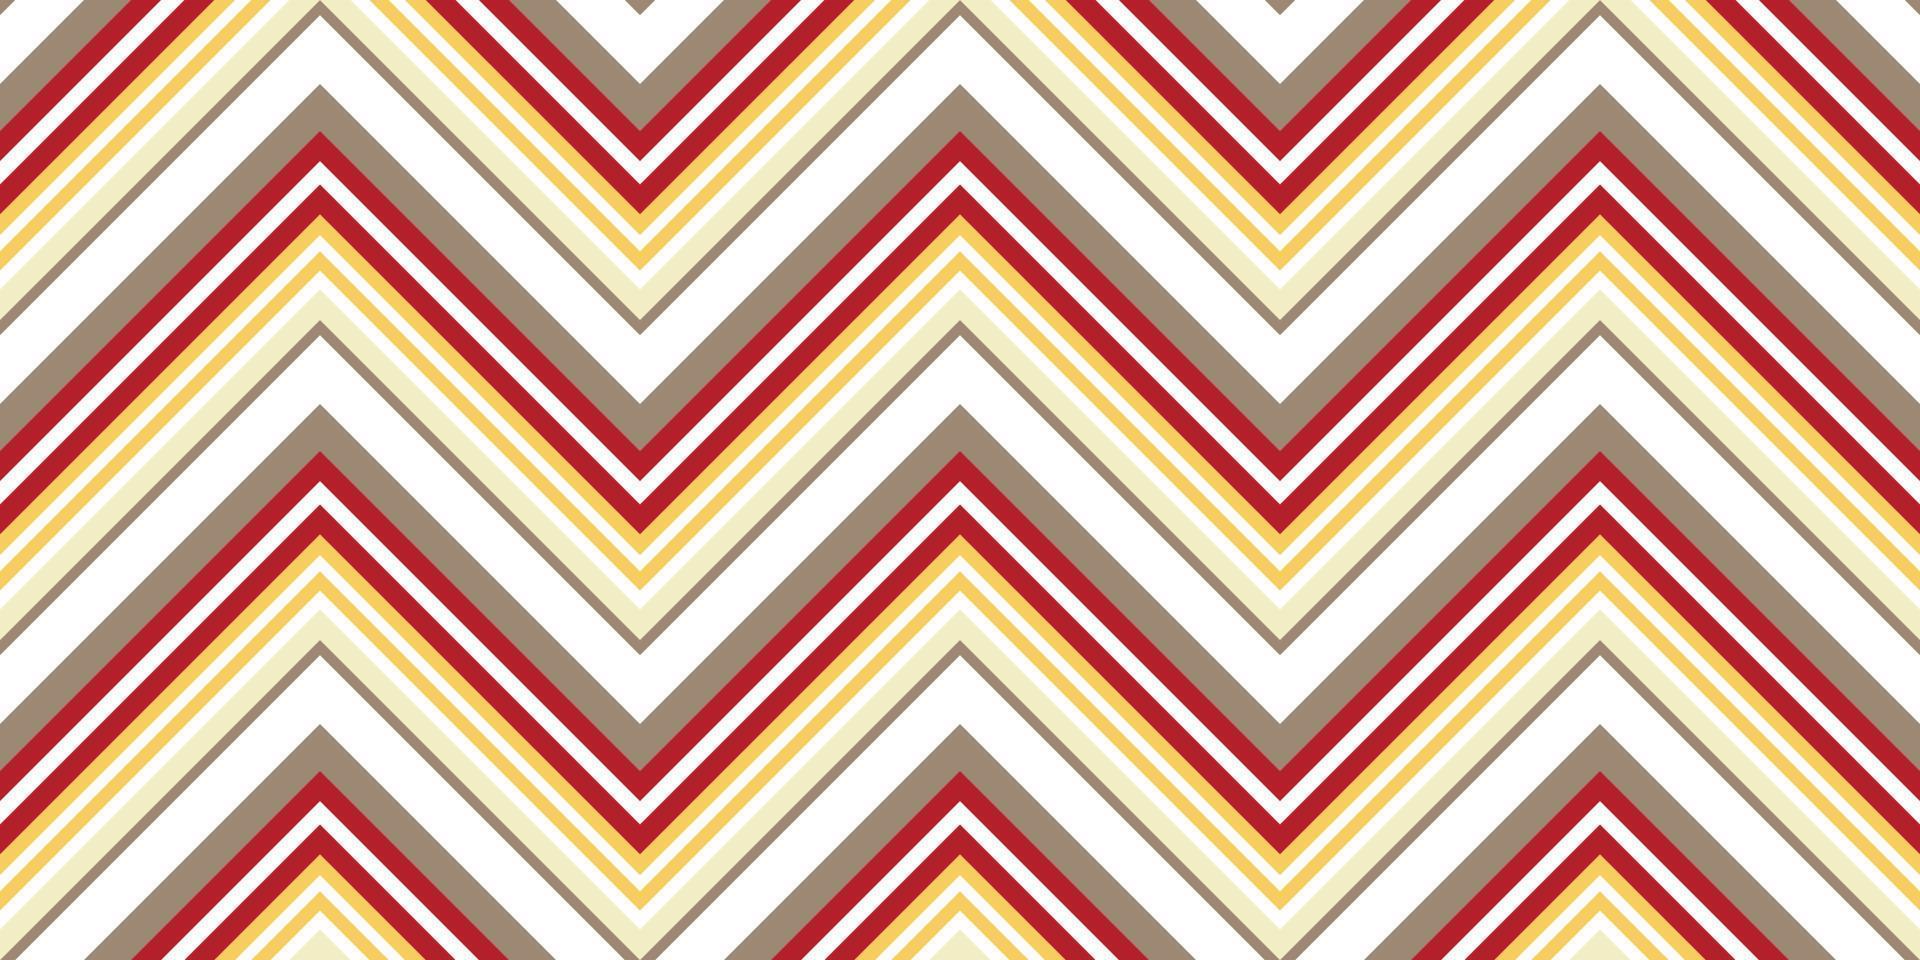 Zigzag chevron pattern digital art print fabric design pattern vector